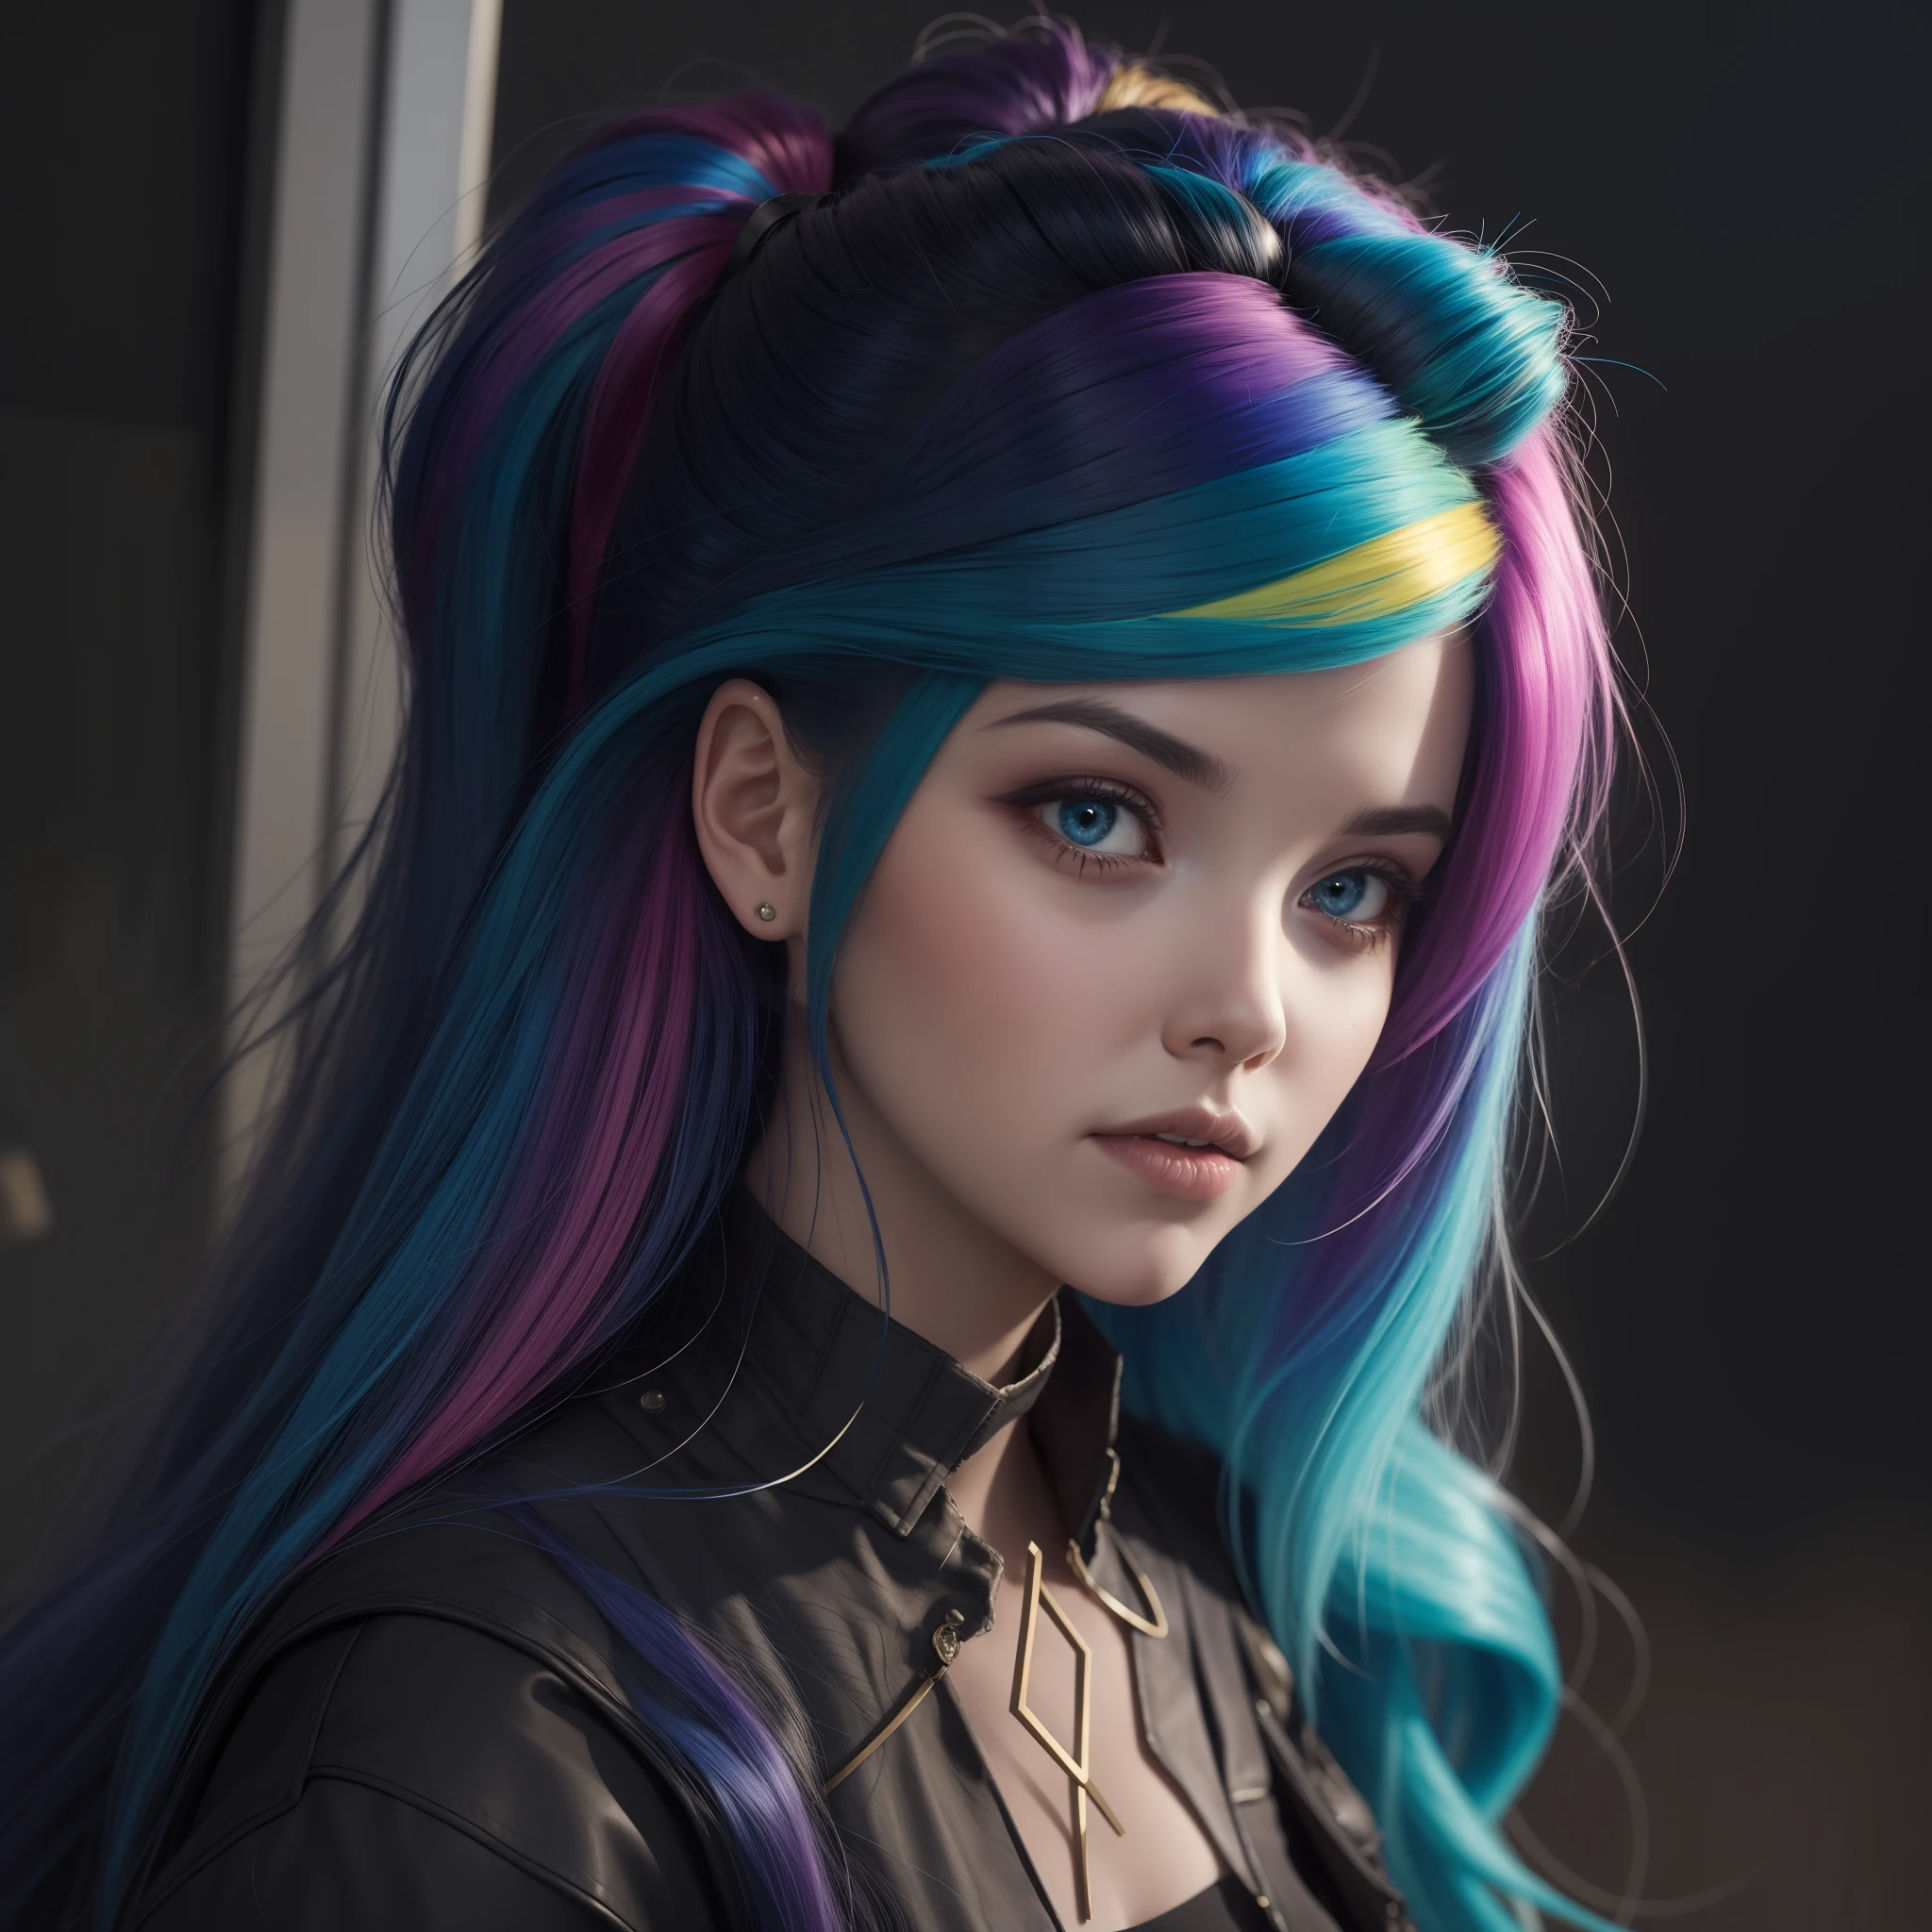 masterpiece, best quality, girl with rainbow hair, really wild hair, mane